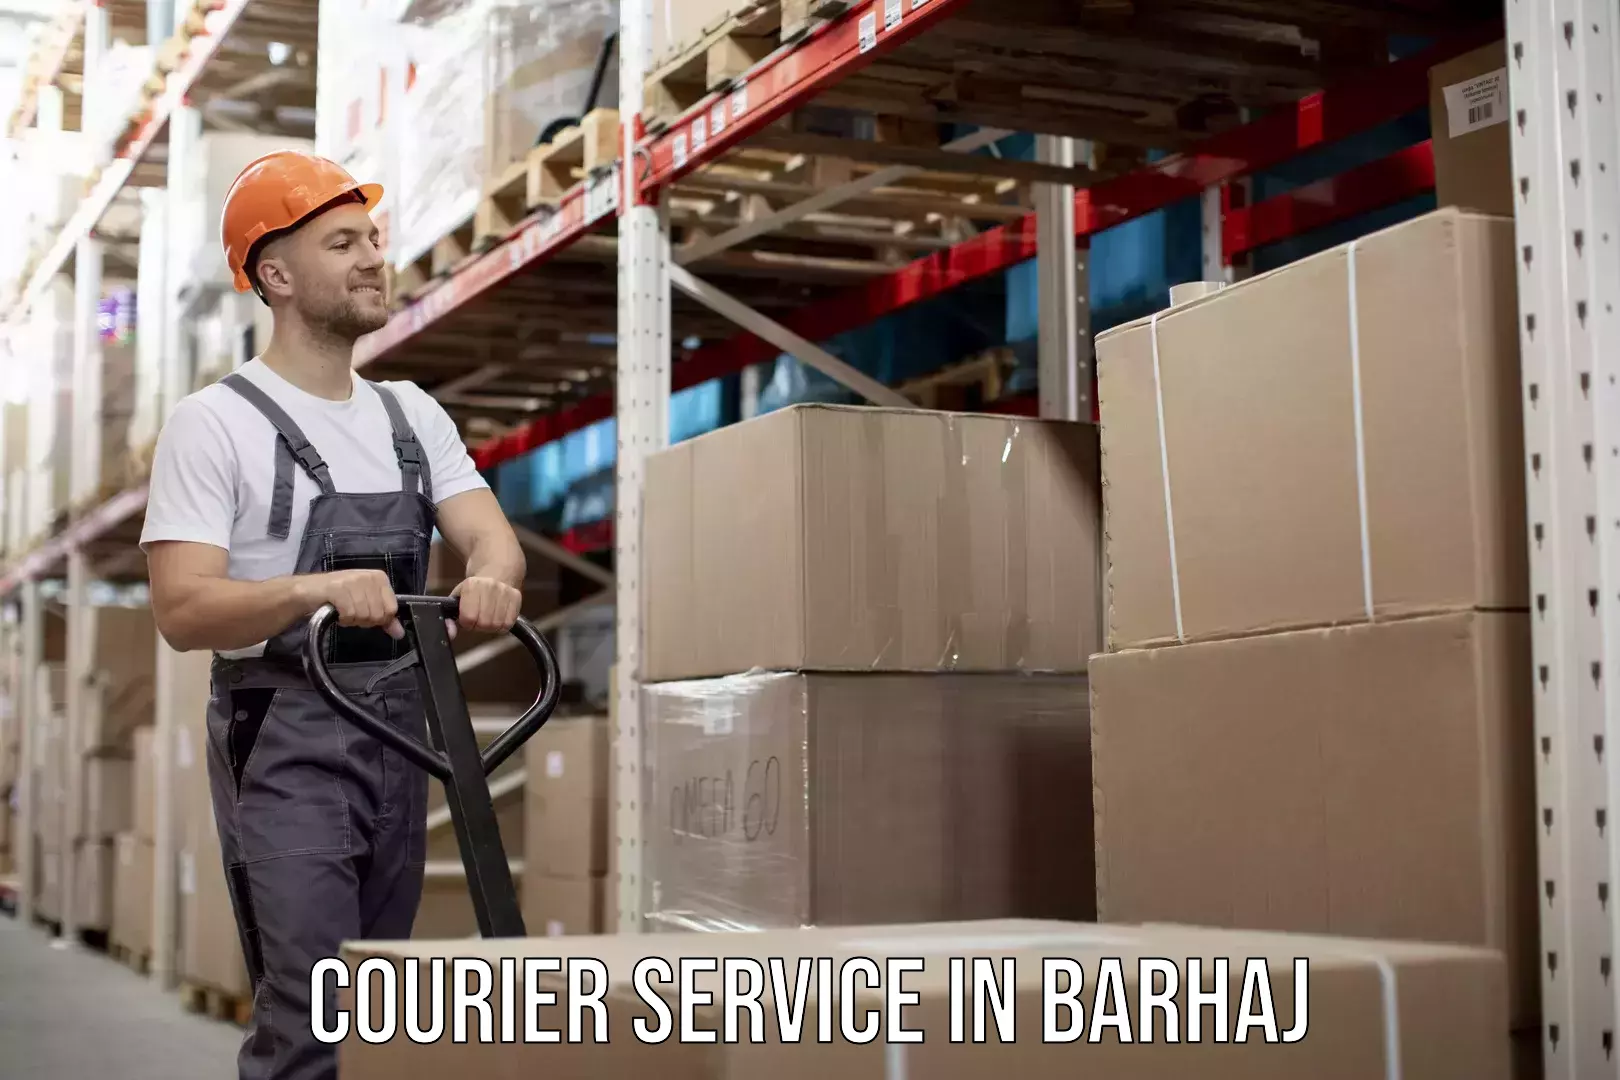 Urban courier service in Barhaj